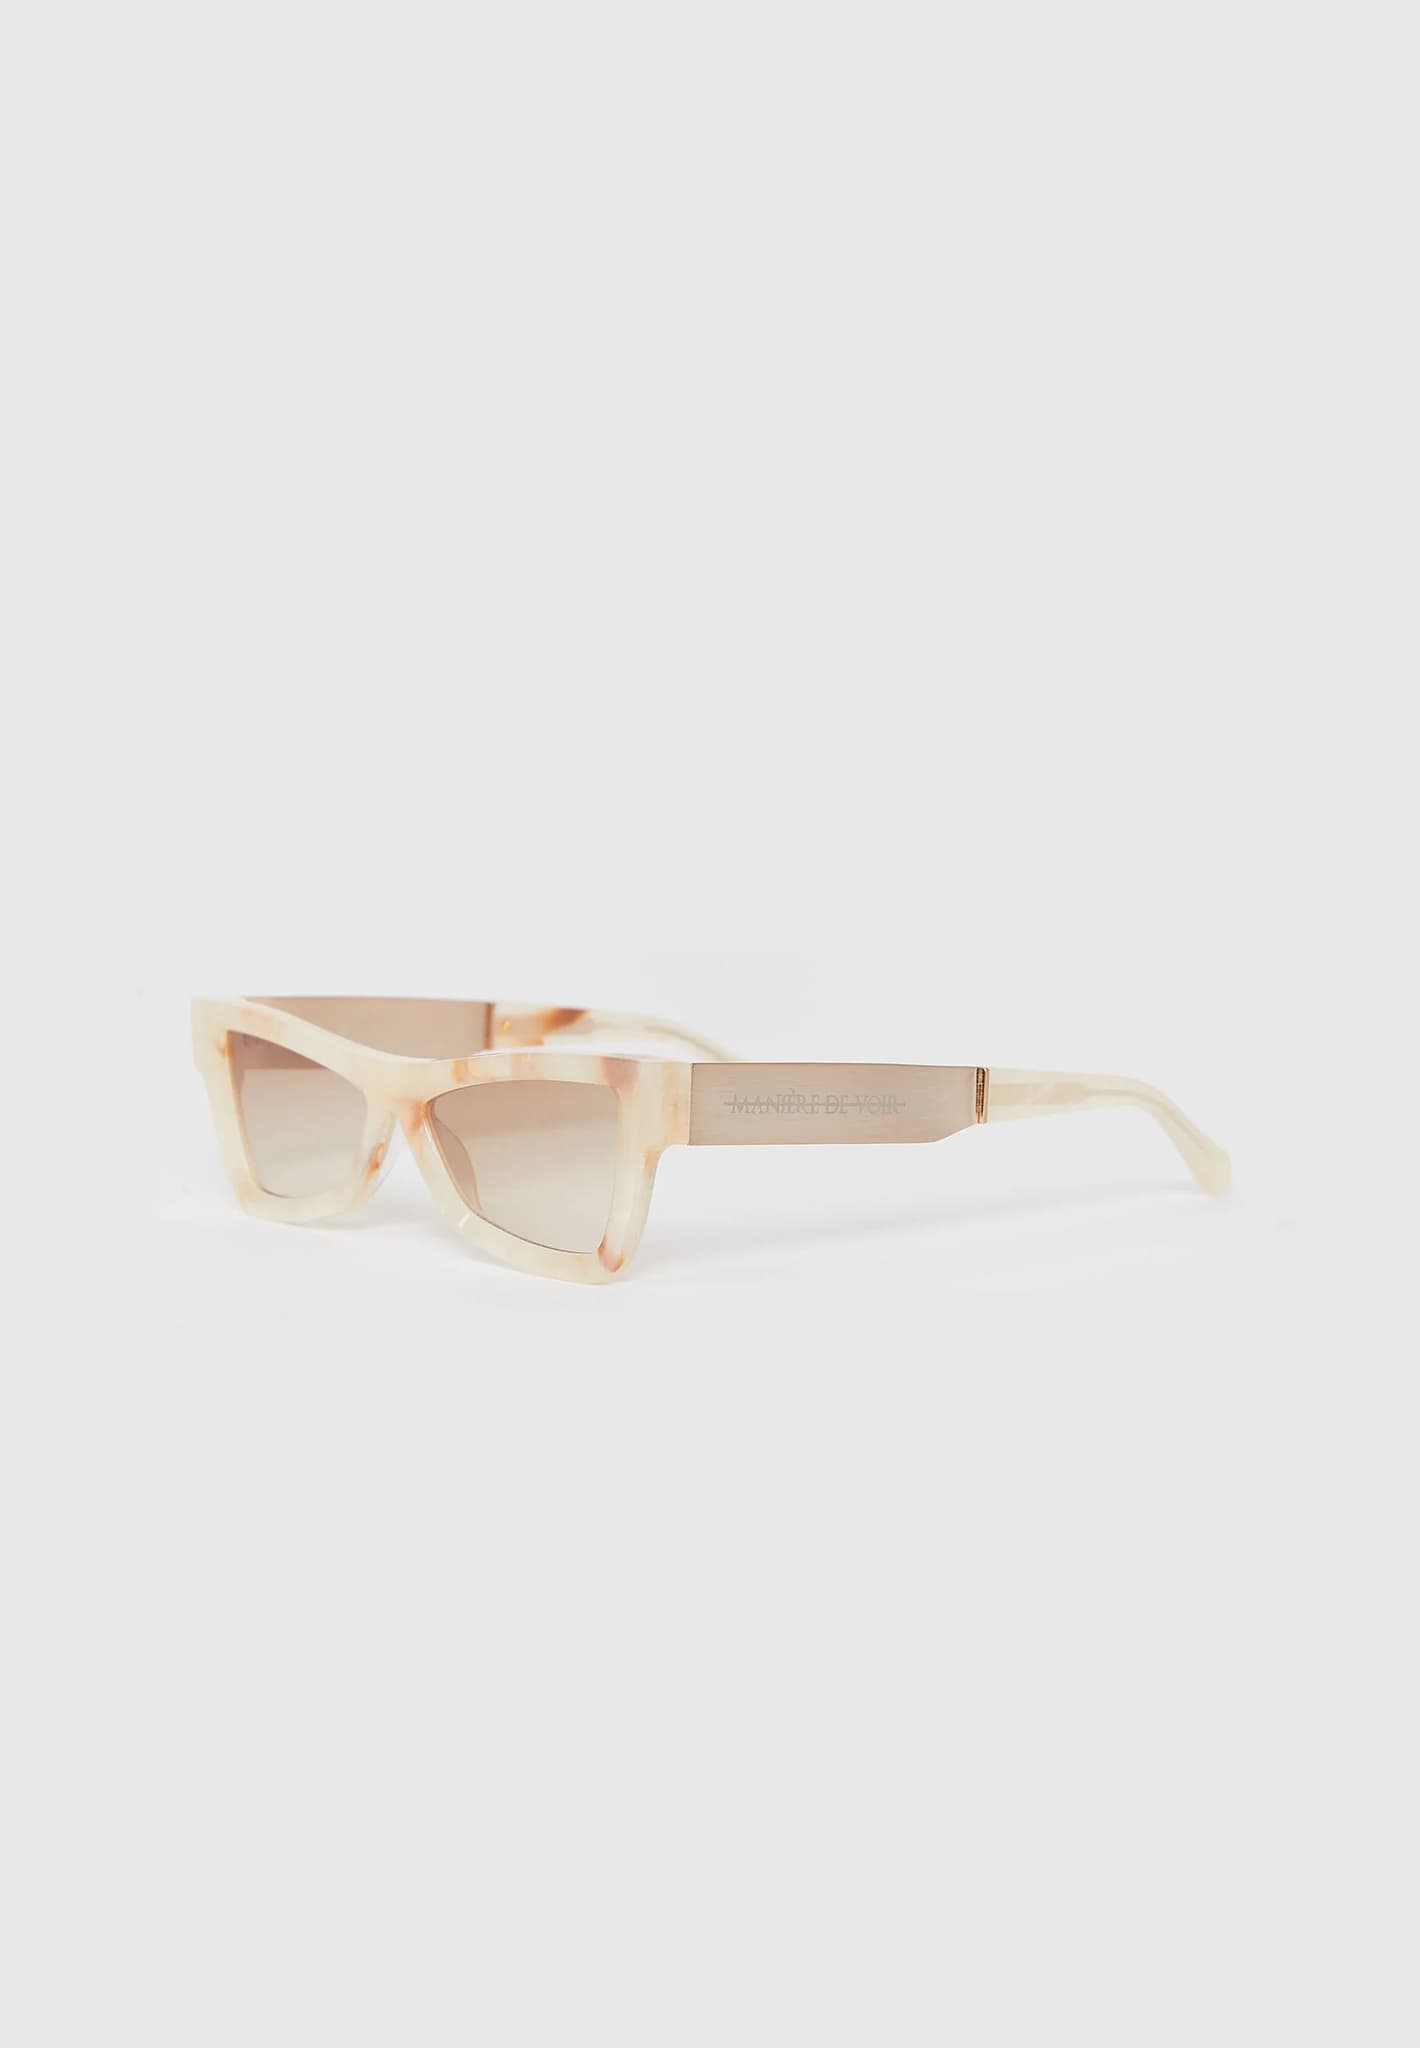 corsica-sunglasses-beige